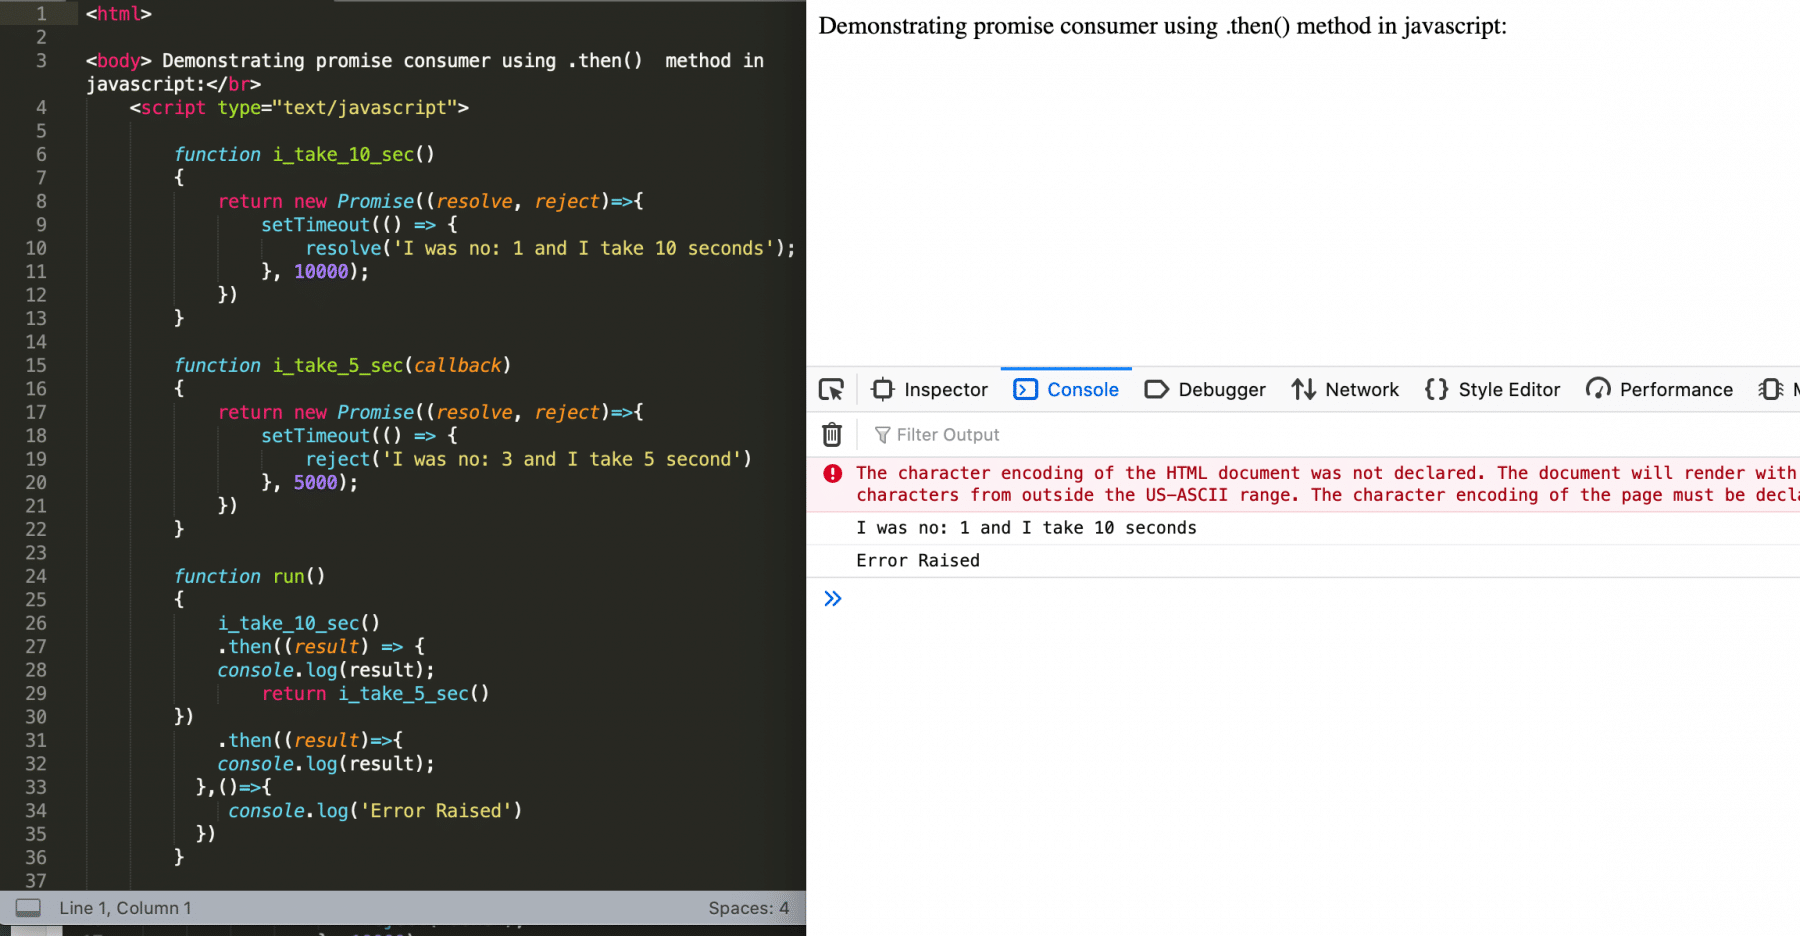  handling promise using .then() method in JavaScript